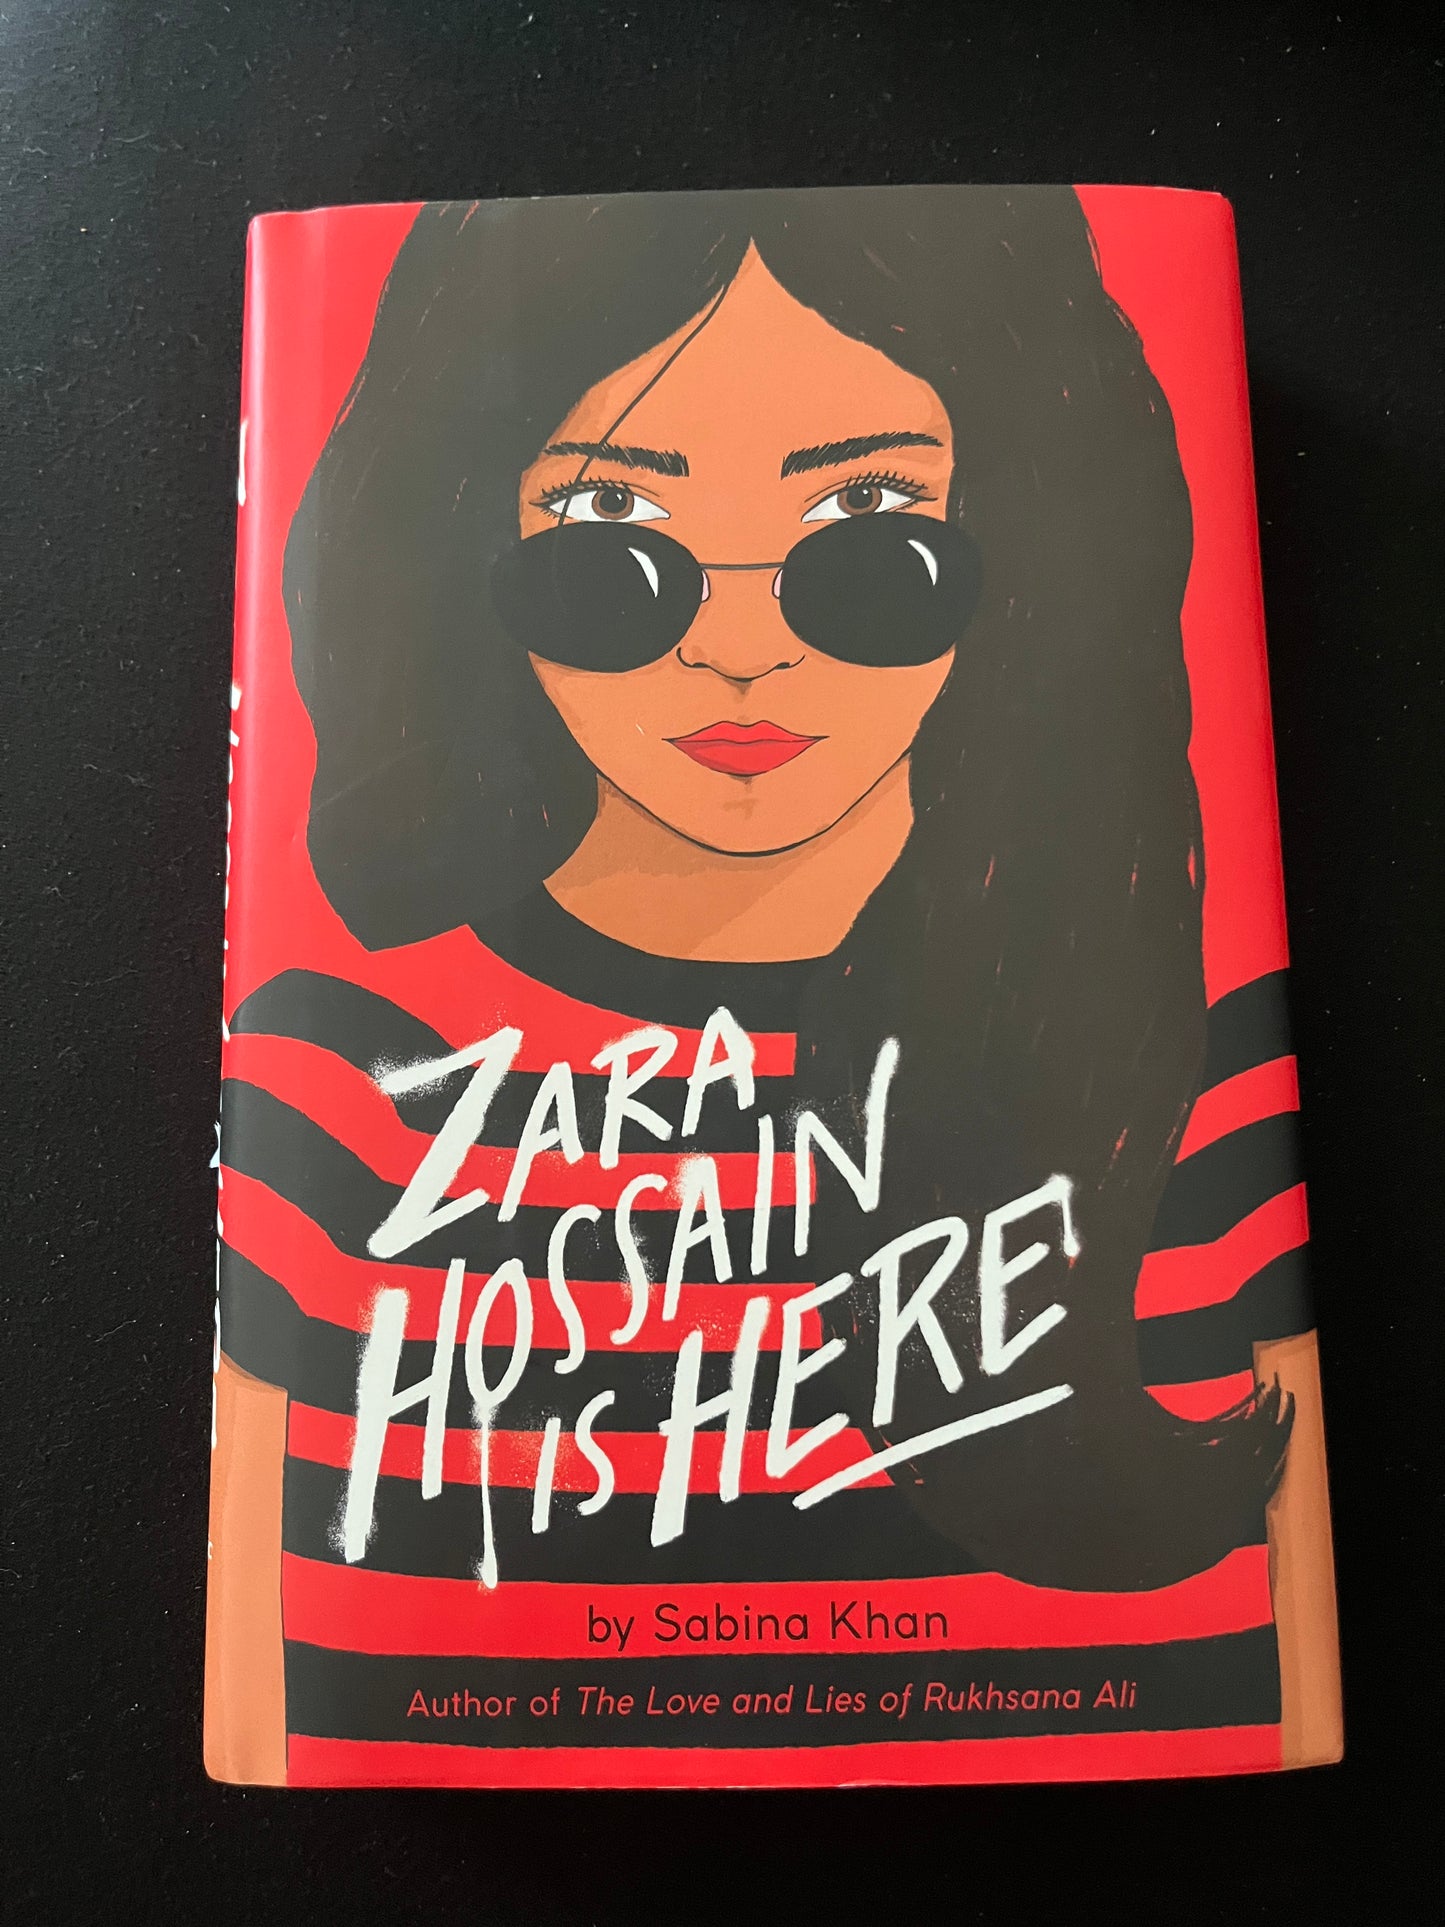 ZARA HOSSAIN IS HERE by Sabina Khan